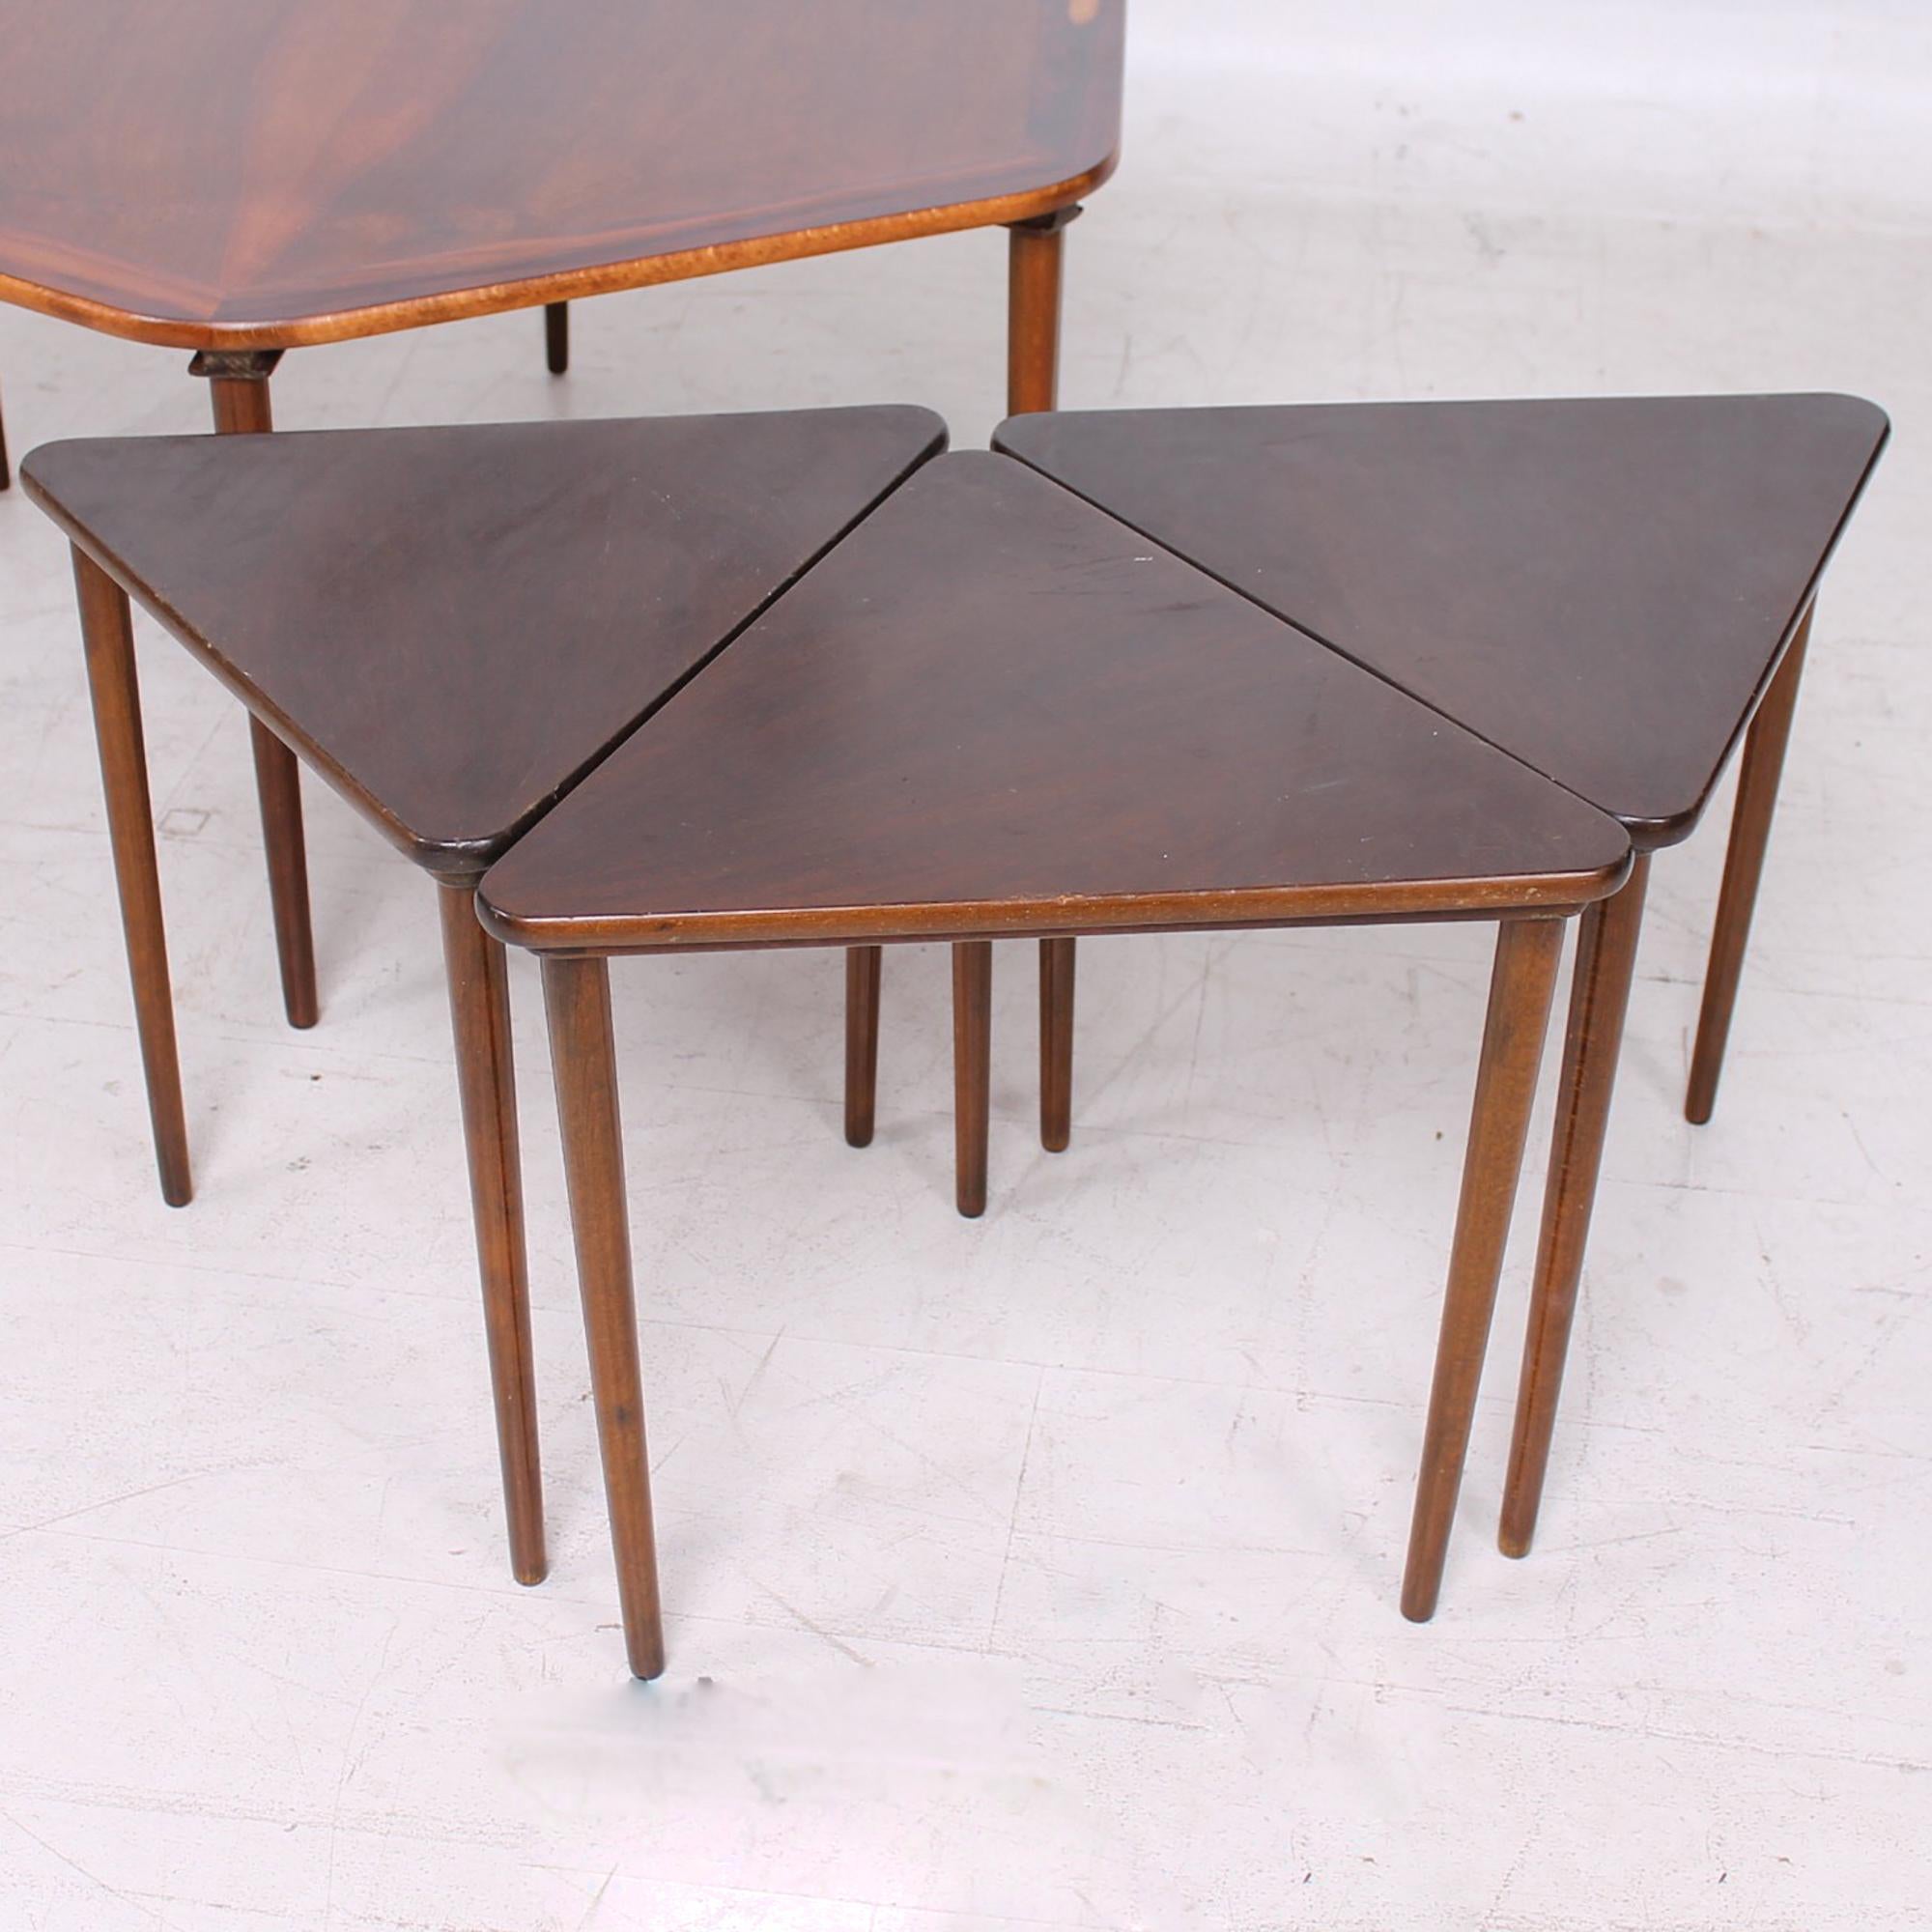 Scandinavian Modern France & Son Rosewood Hexagonal Coffee Table and 6 Nesting Tables 1950s Denmark